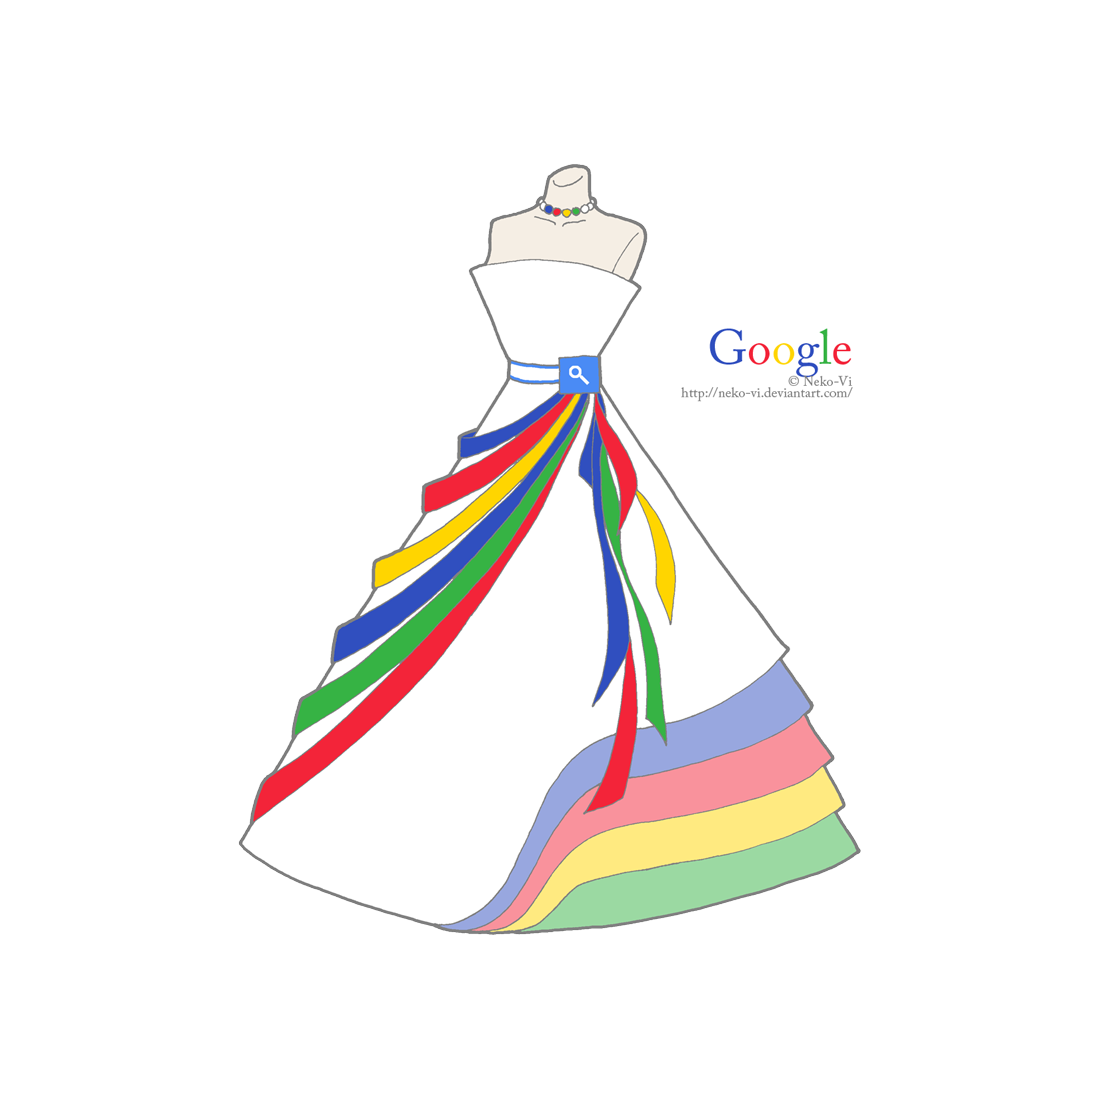 Google in Fashion